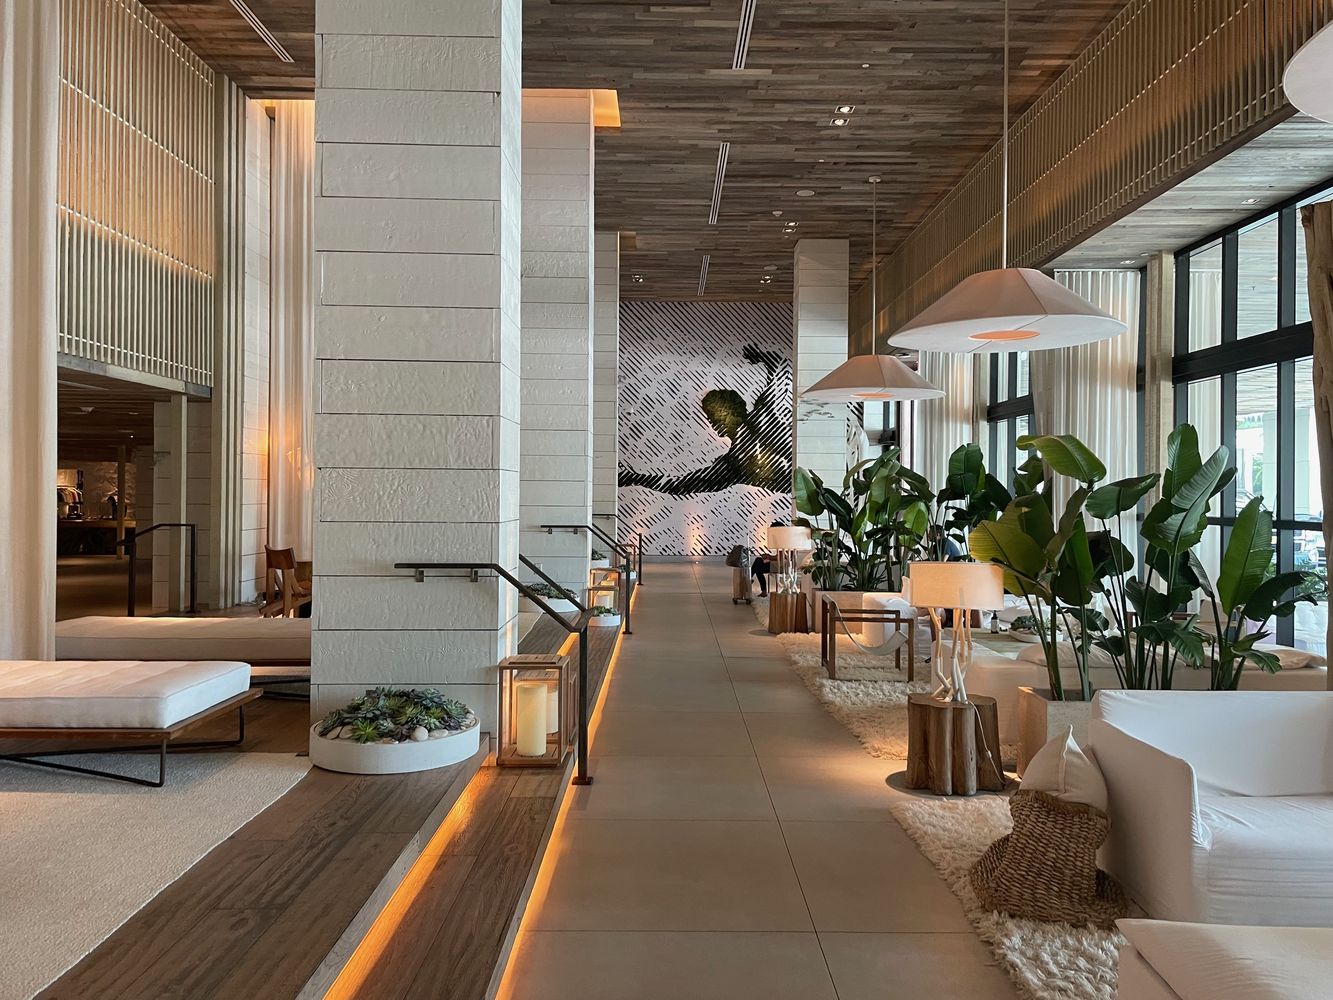 Luxury 5-star Hotels Miami beach IMG_0986